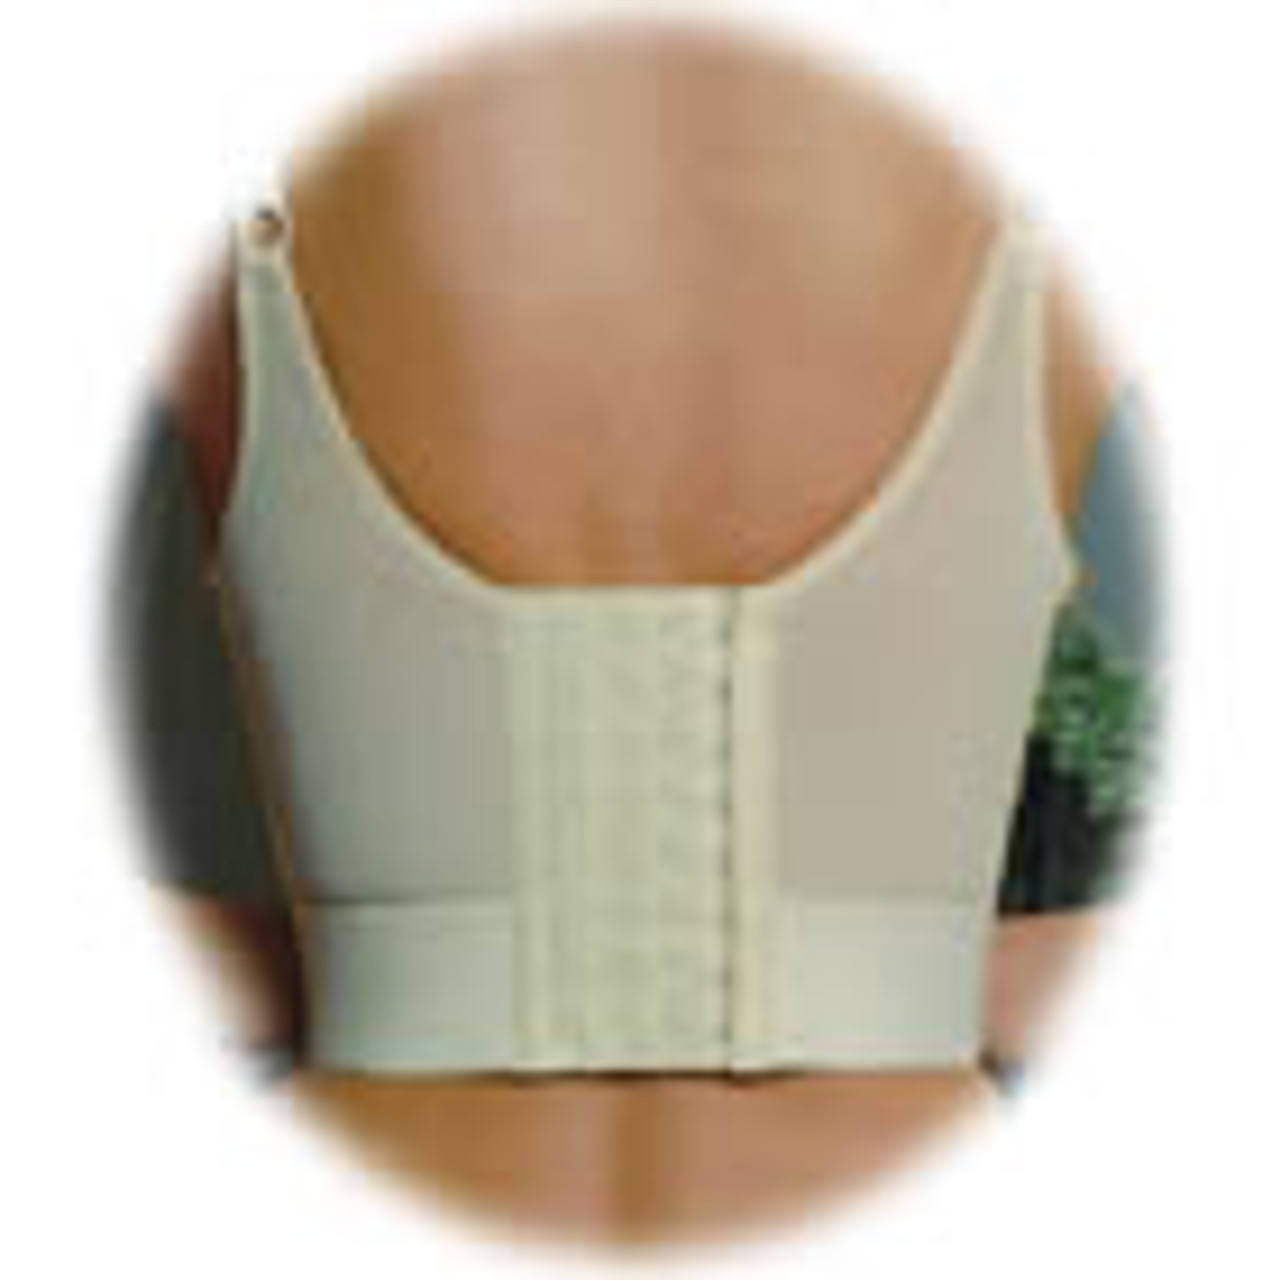 Longline mastectomy bras, customized mastectomy bras